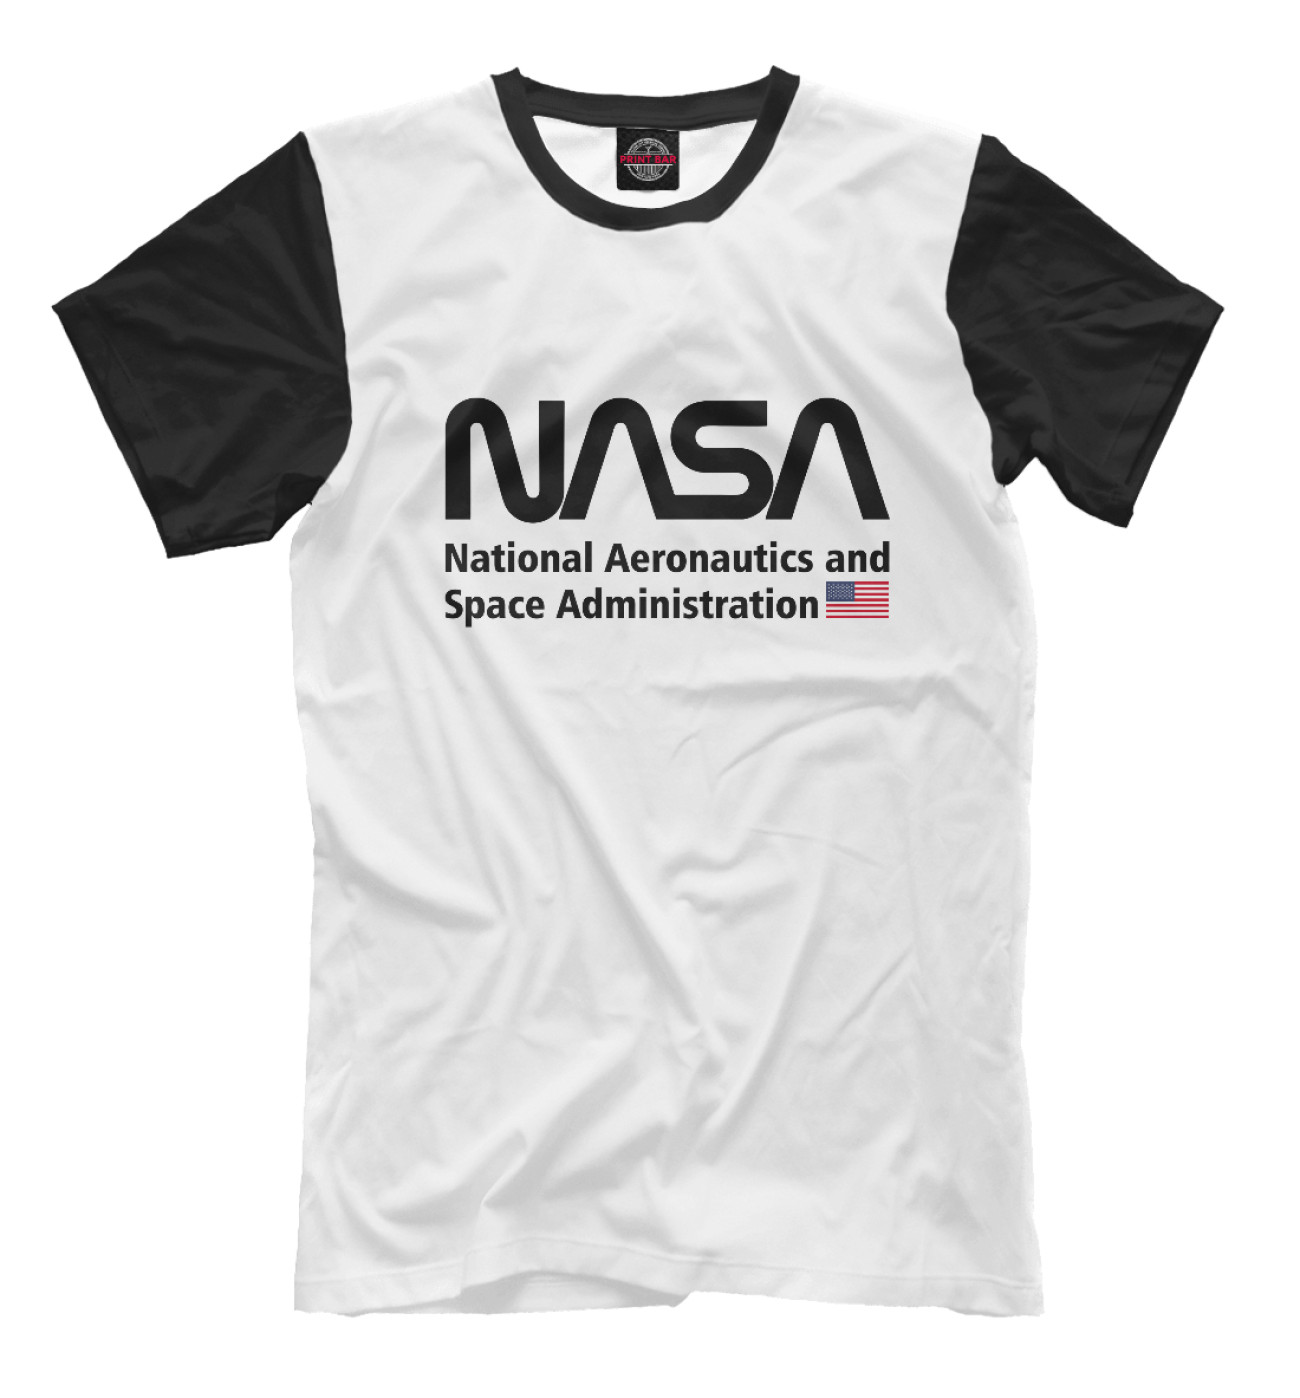 Мужская Футболка NASA, артикул: NSA-670009-fut-2